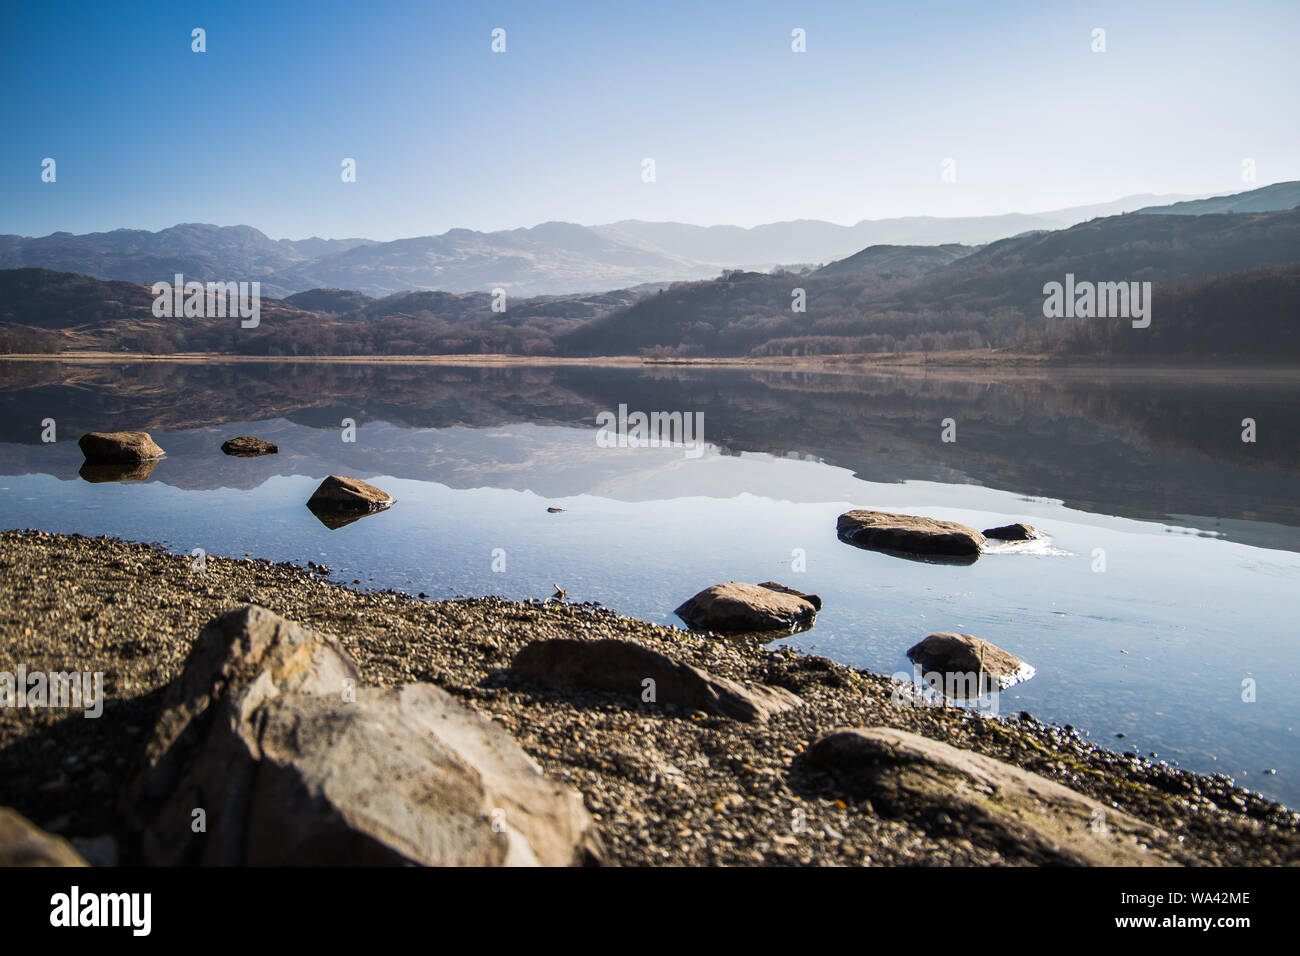 Mountain reflection on water Stock Photo